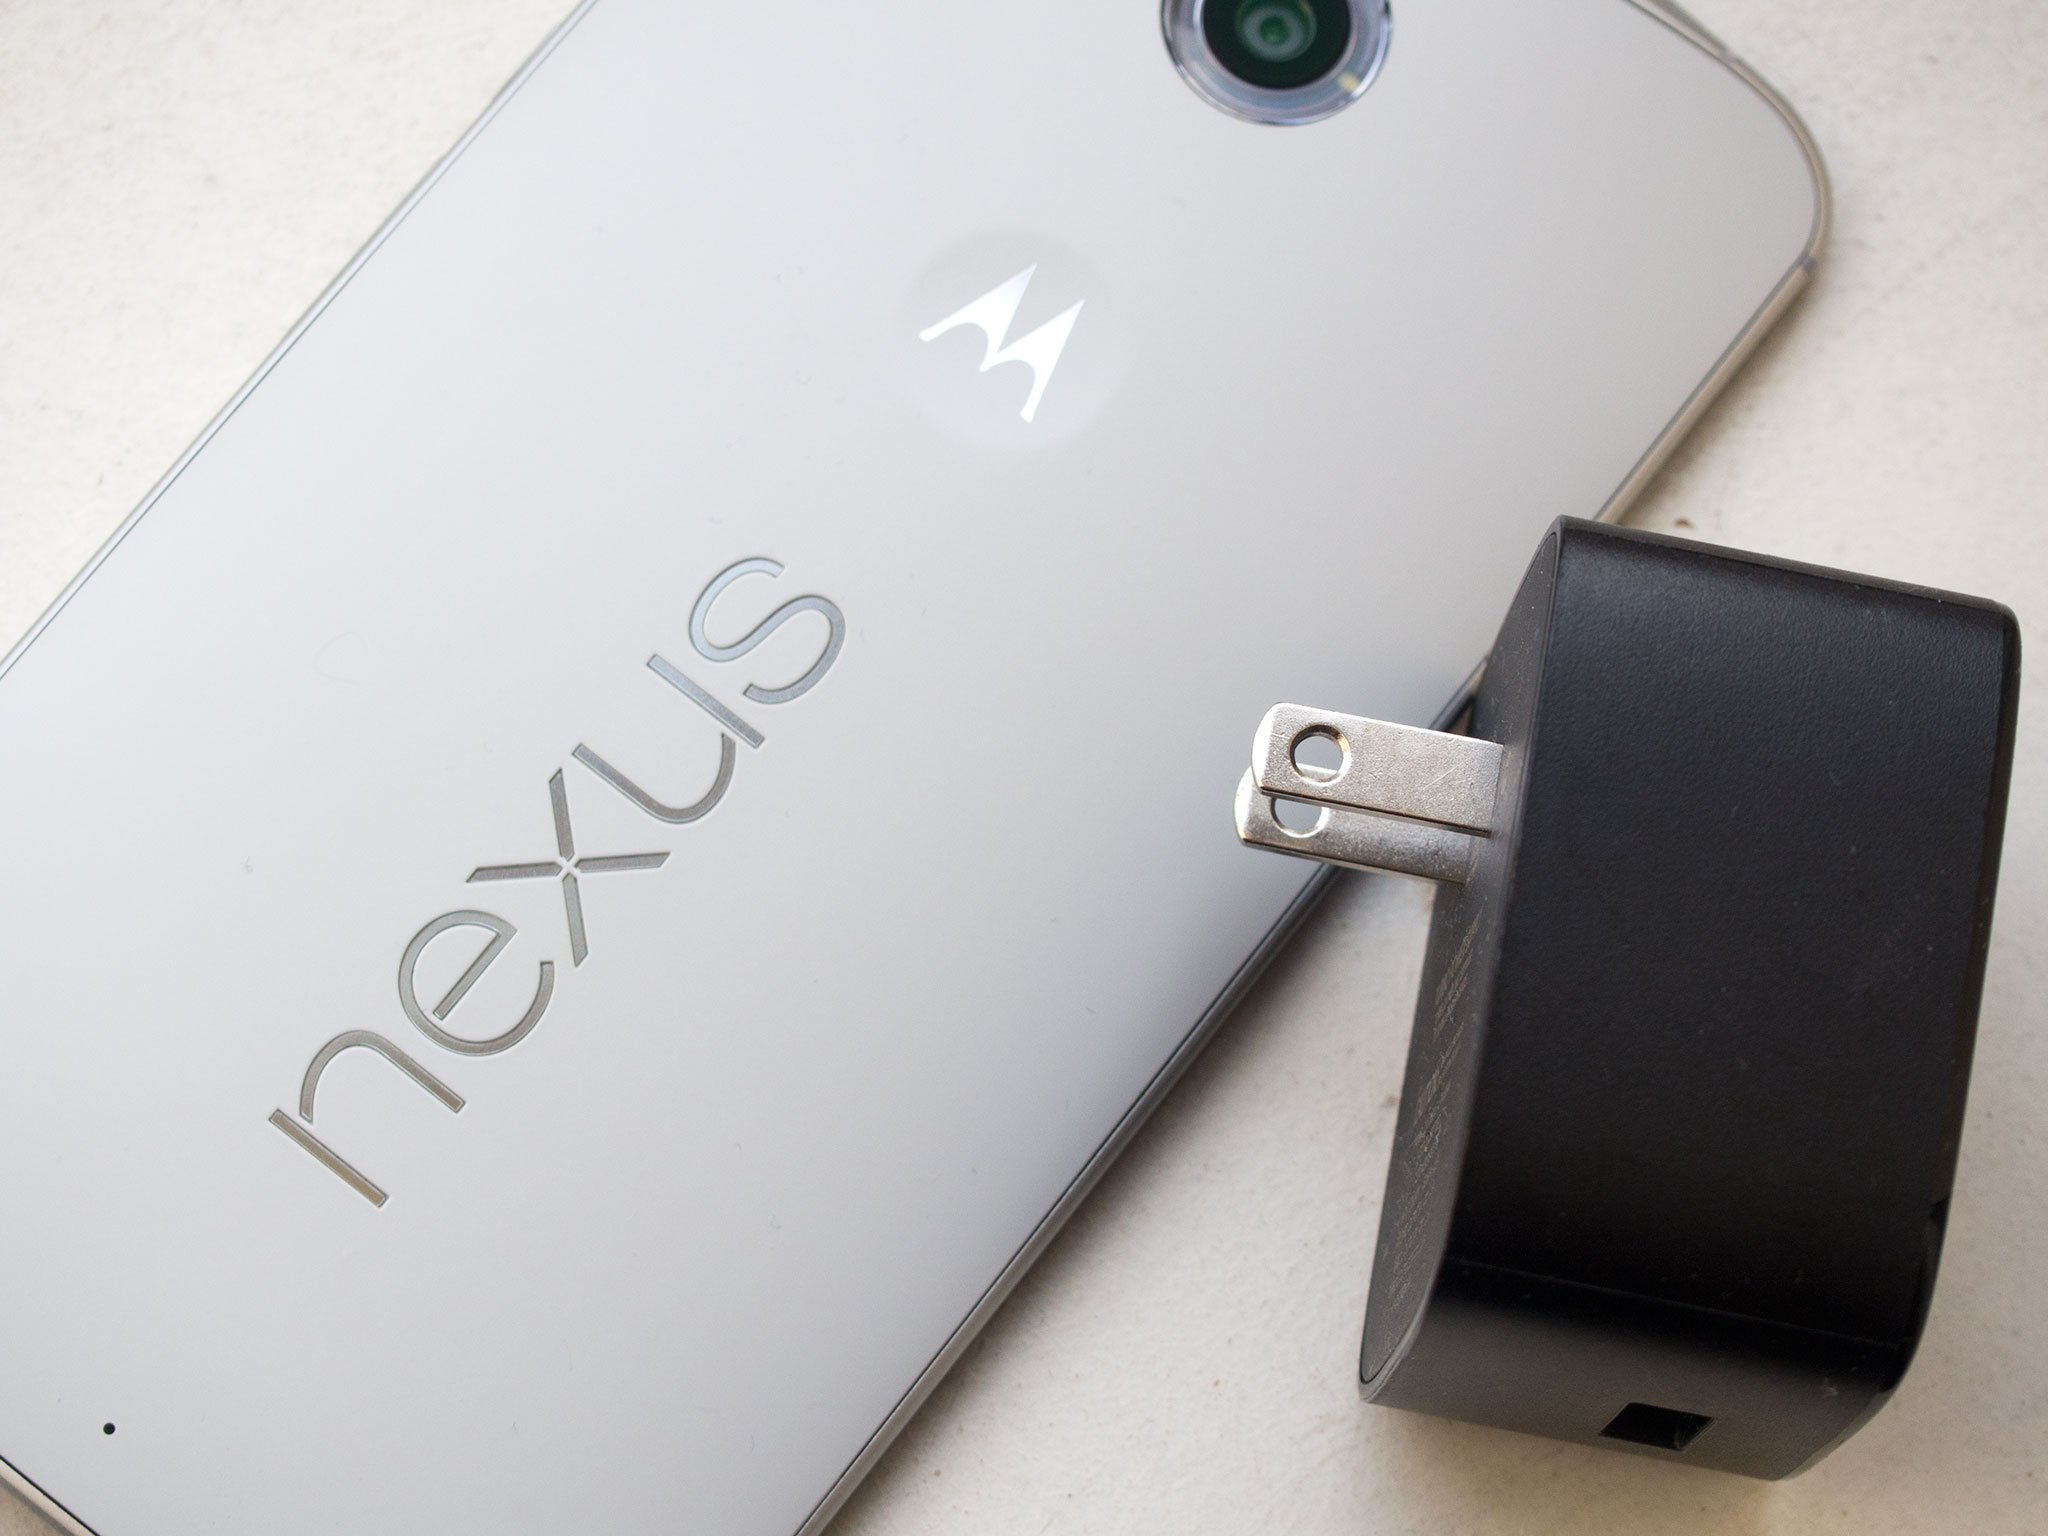 Nexus 6 turbo charger